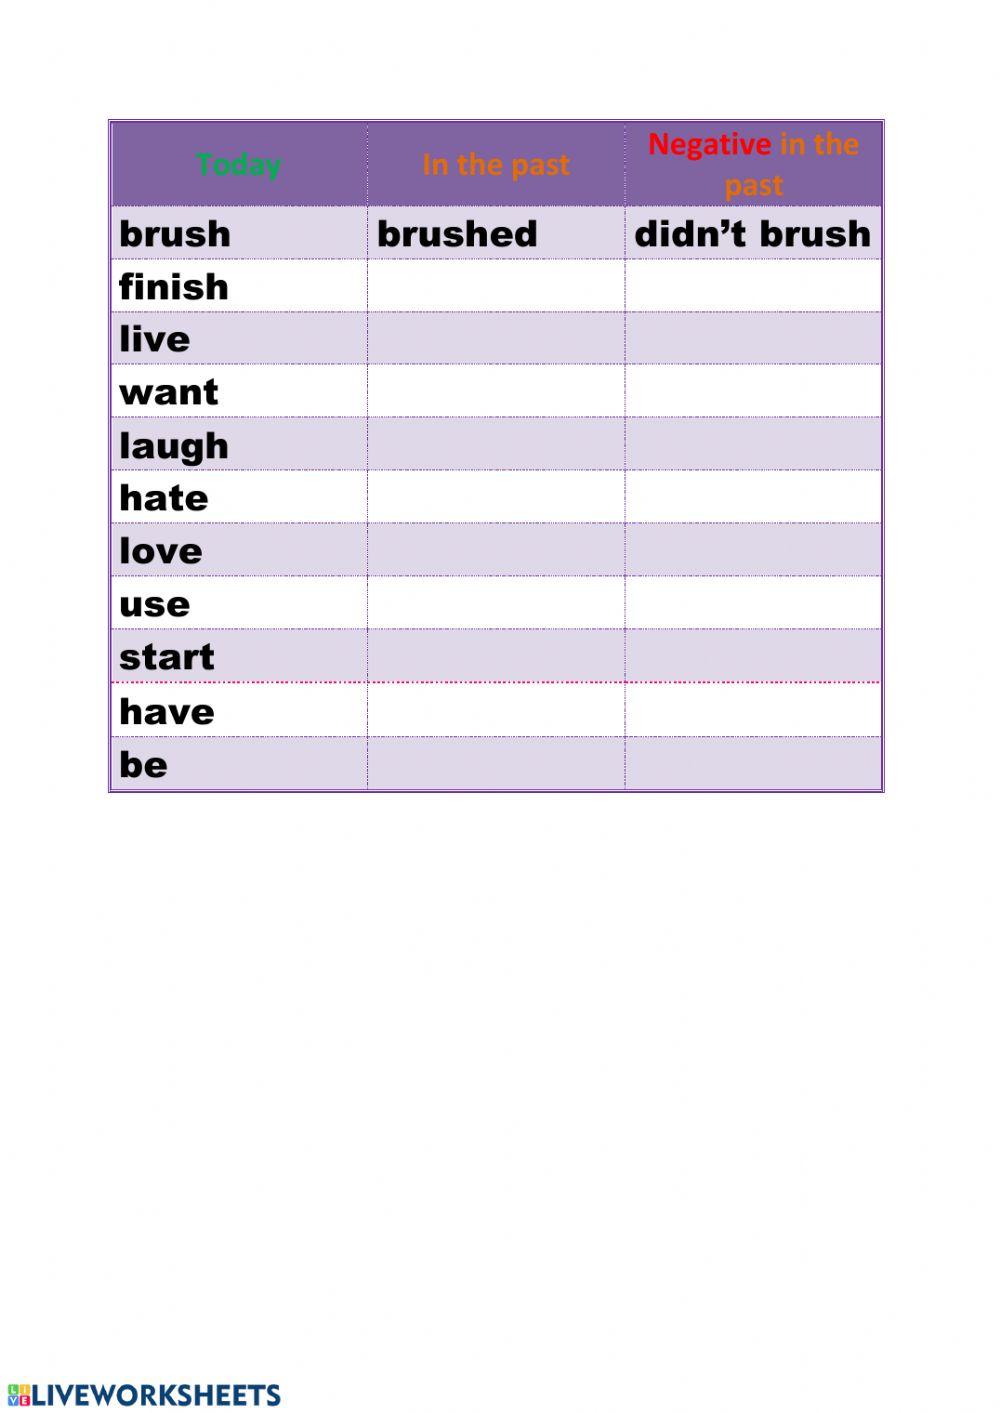 Past Simple regular verbs